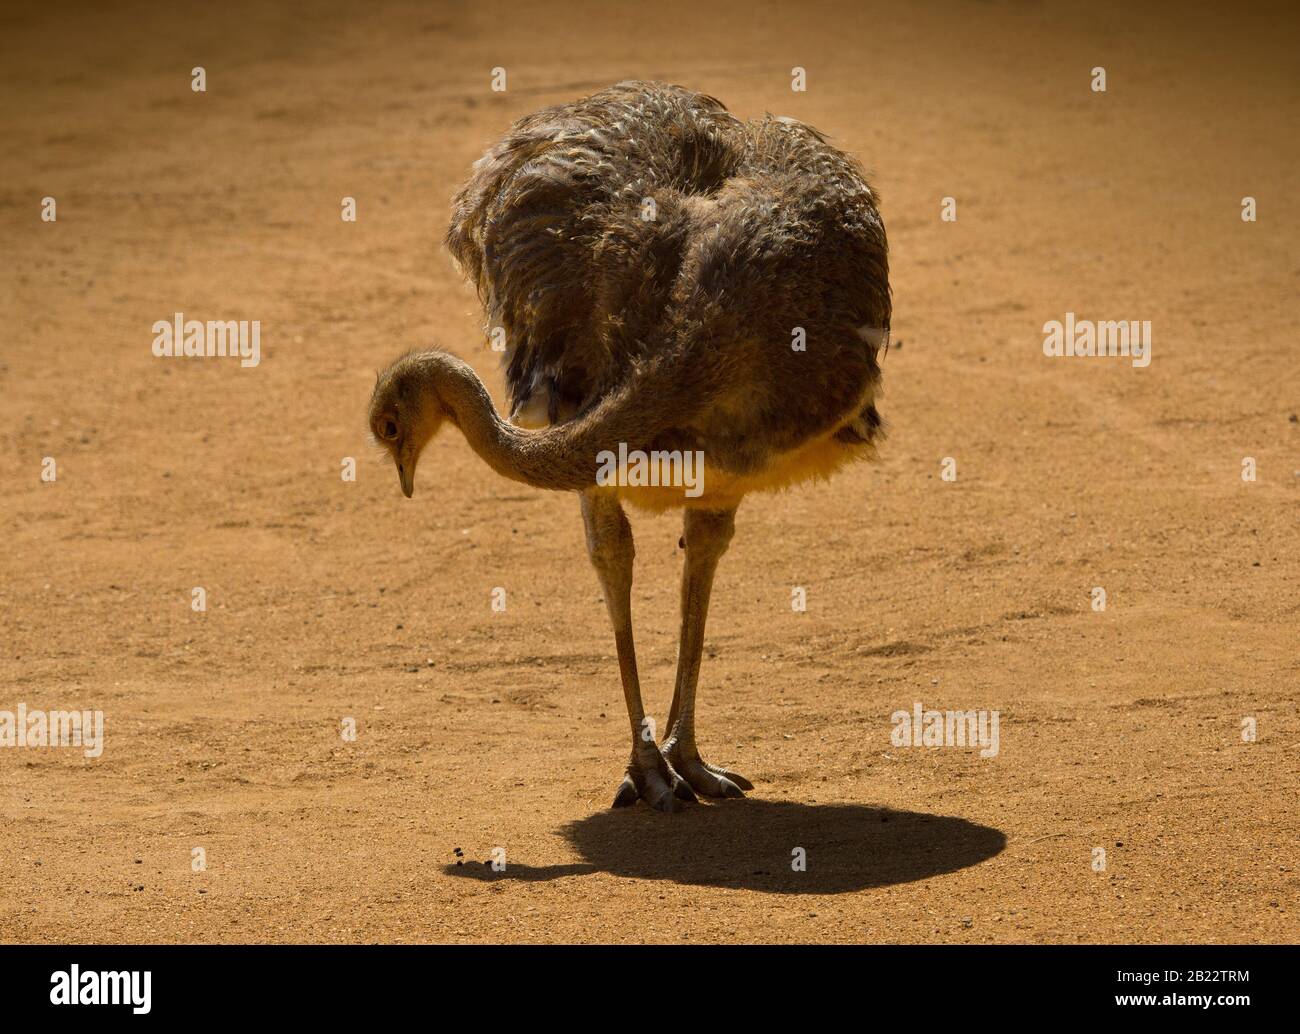 A Darwin's Rhea foraging for food in an arid, sandy landscape Stock Photo